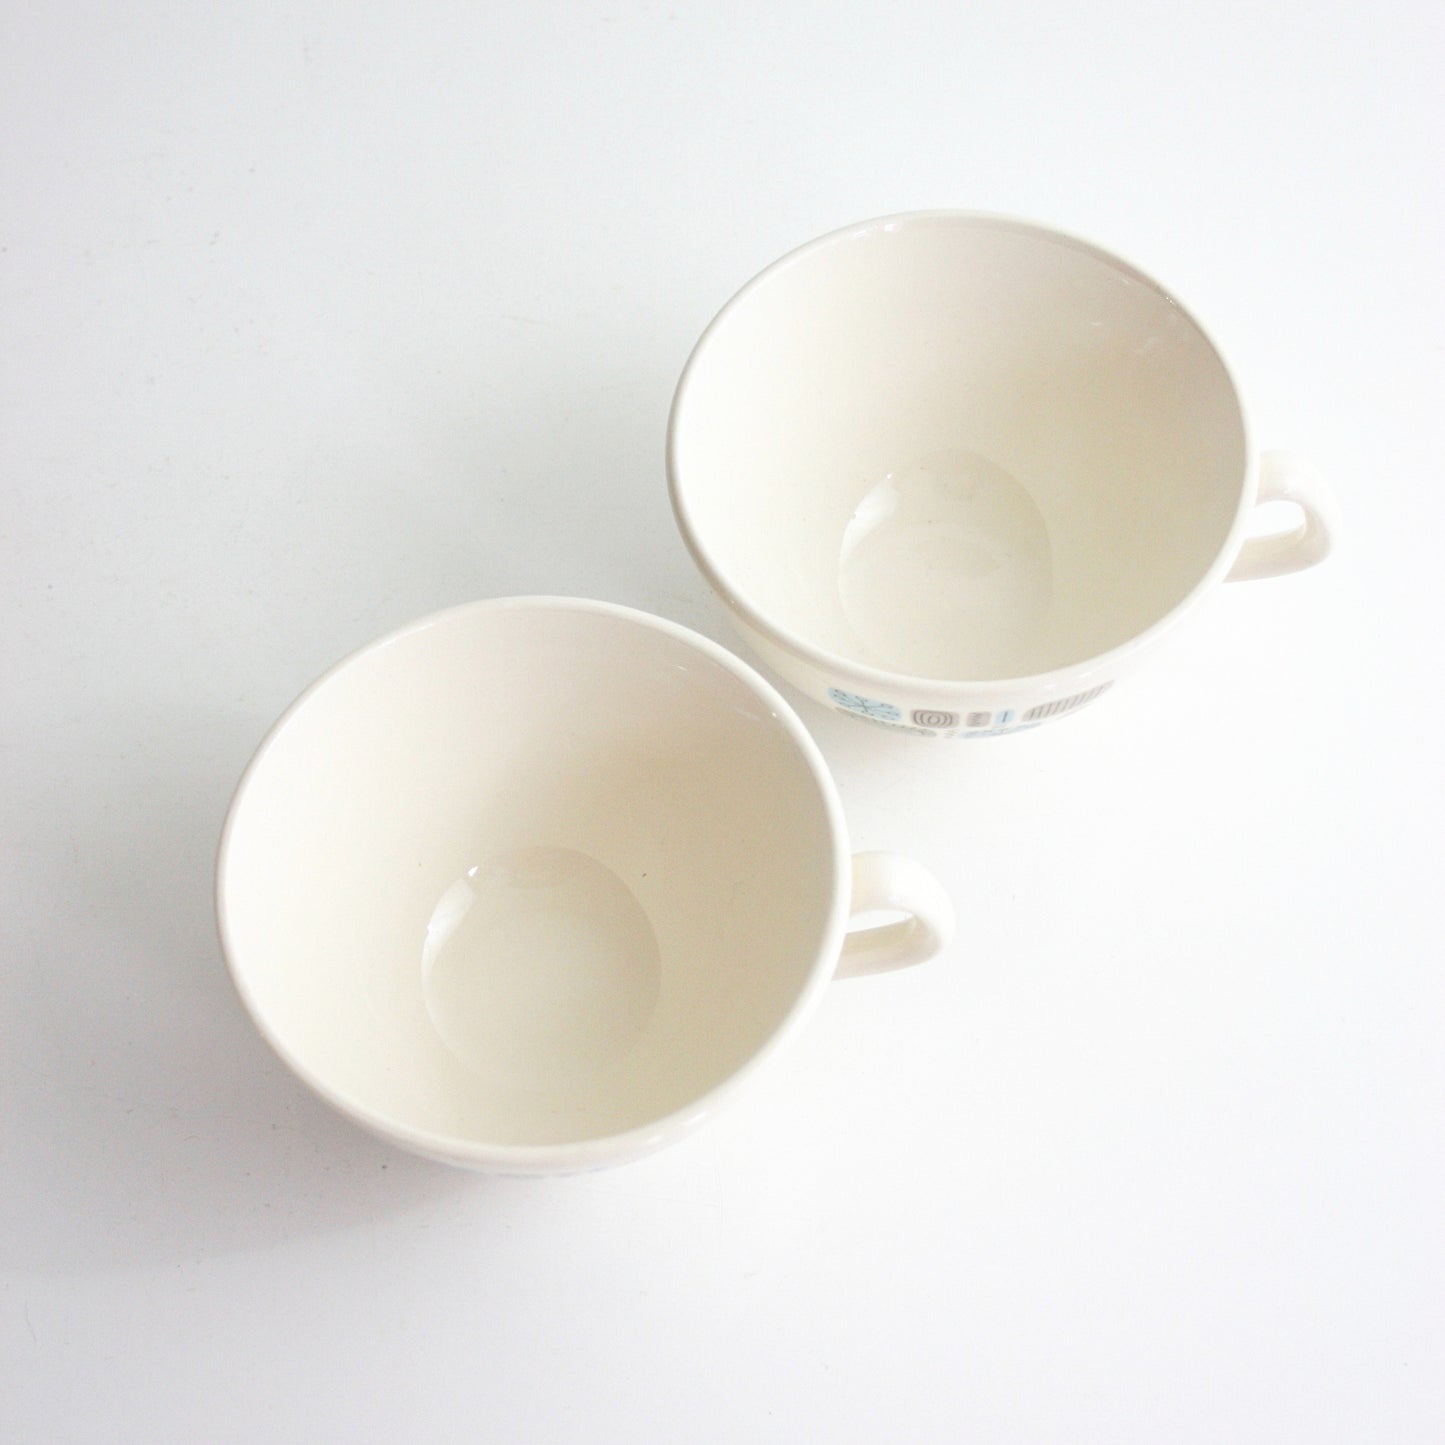 SOLD - Mid Century Modern Temporama Teacups / Vintage Teacups / Canonsburg Pottery Temporama Teacups